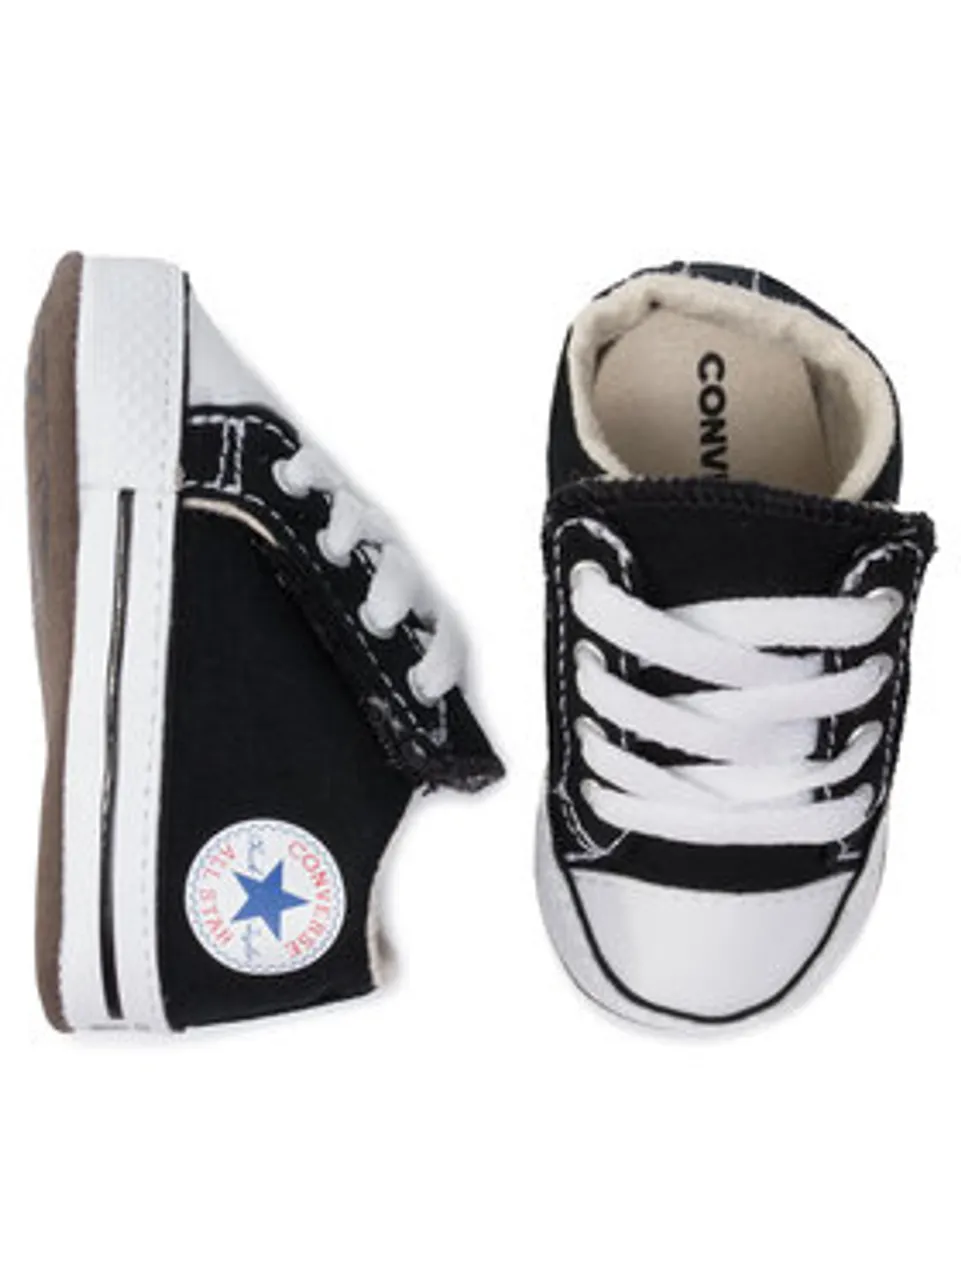 Converse Sneakers aus Stoff Ctas Cribster Mid 865156C Schwarz